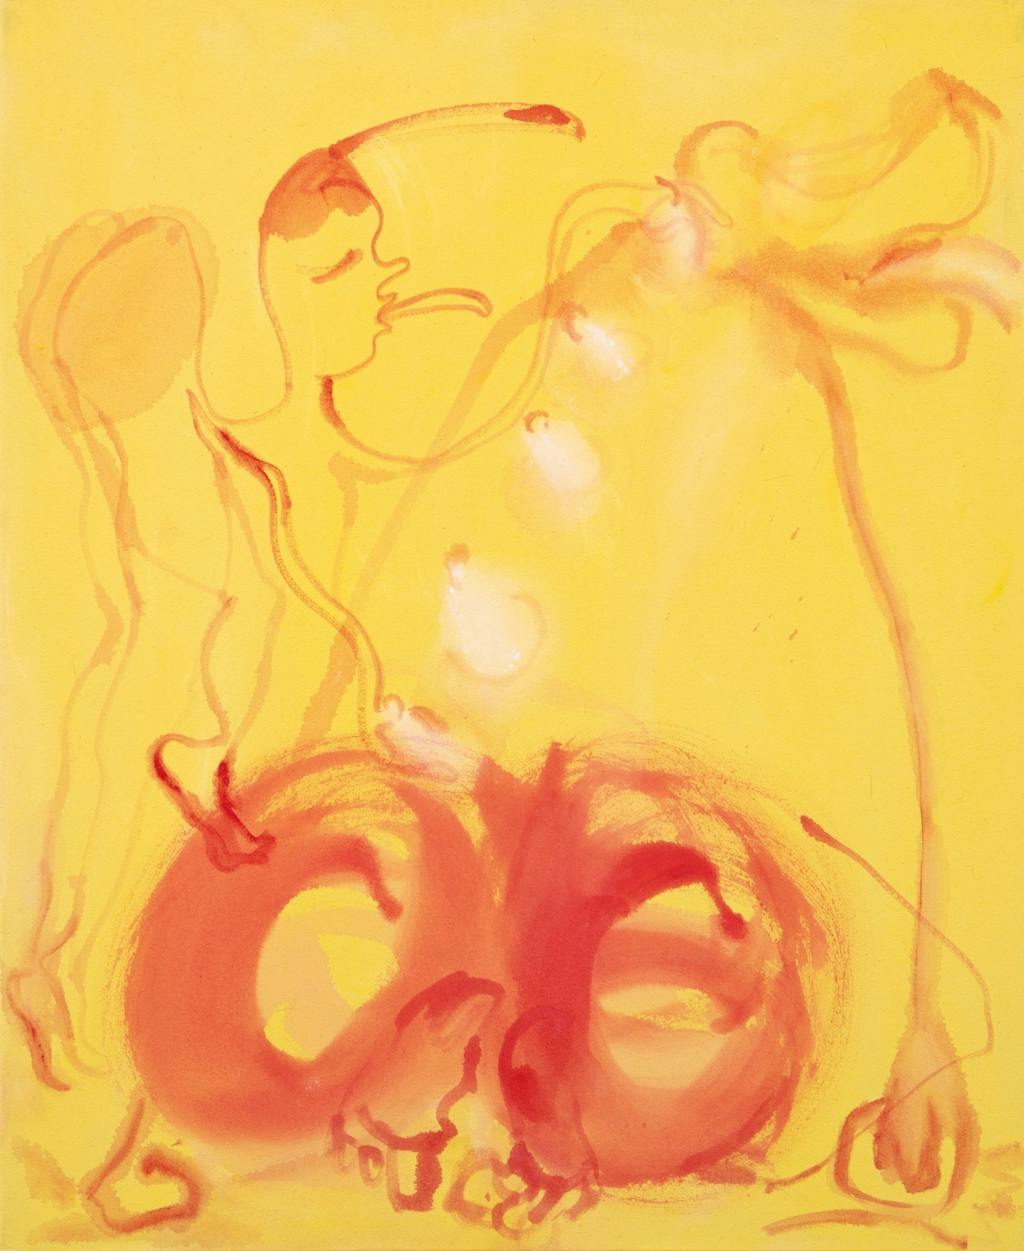 Andrea Éva Győri, Tongue with Transparent Body (2019) ink and gouache on canvas, 110 x 90 cm. Photo: Robert Glas - © Photo: Robert Glas, Paris Internationale